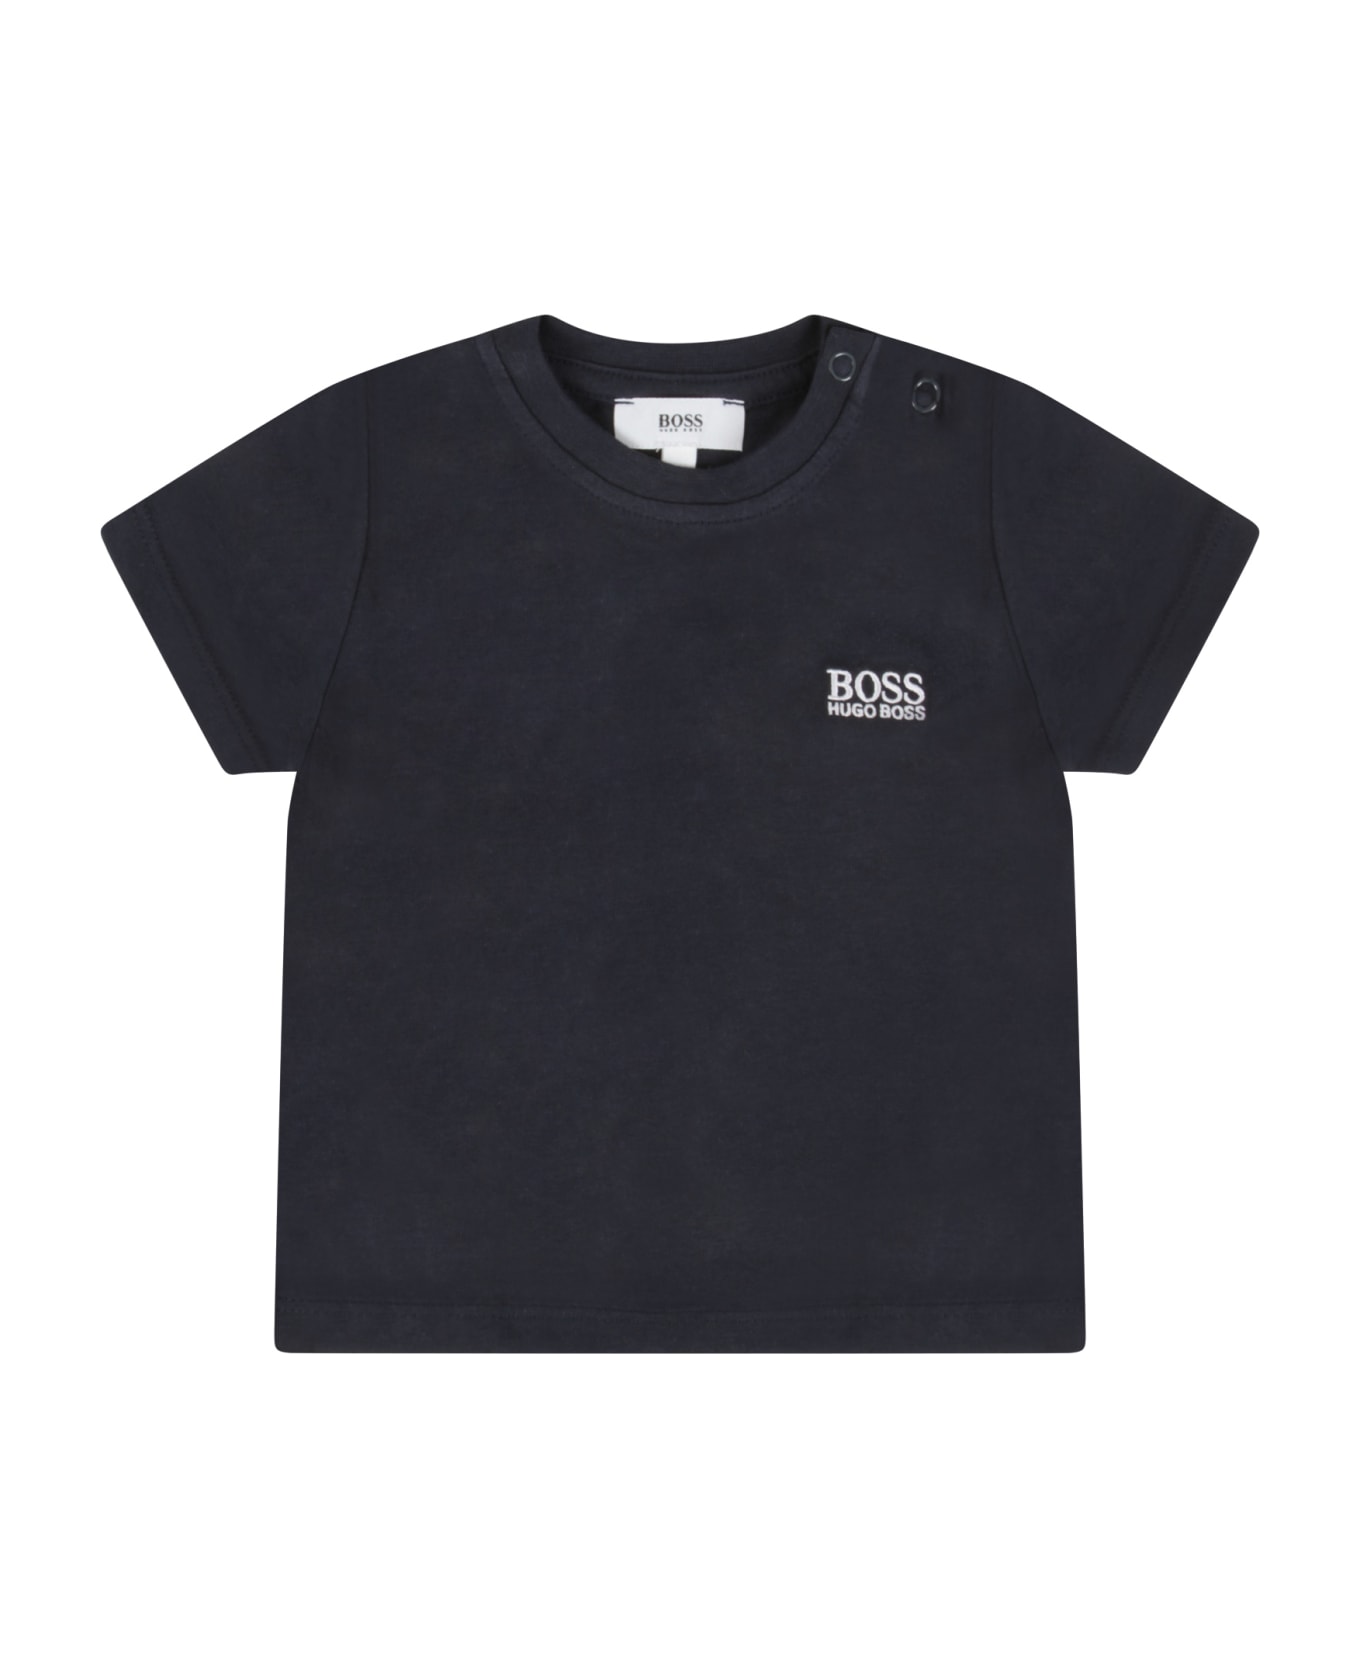 Hugo Boss Blue T-shirt For Baby Boy With White Logo - Blue